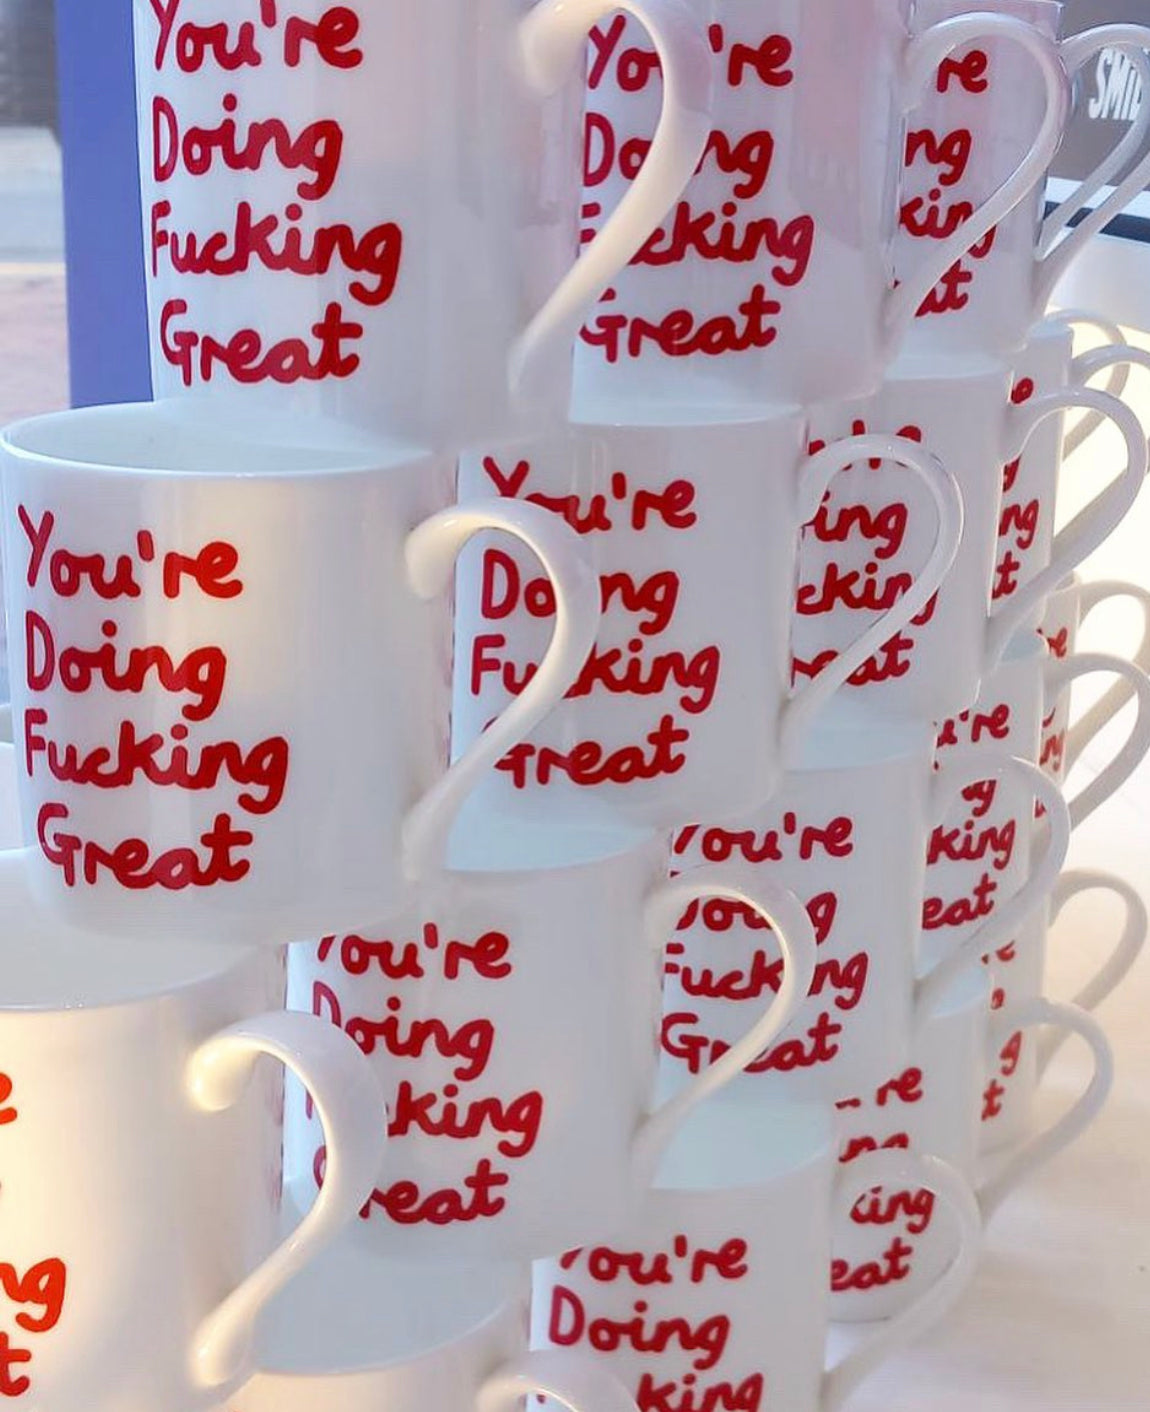 Mug- You're doing fucking great (red)